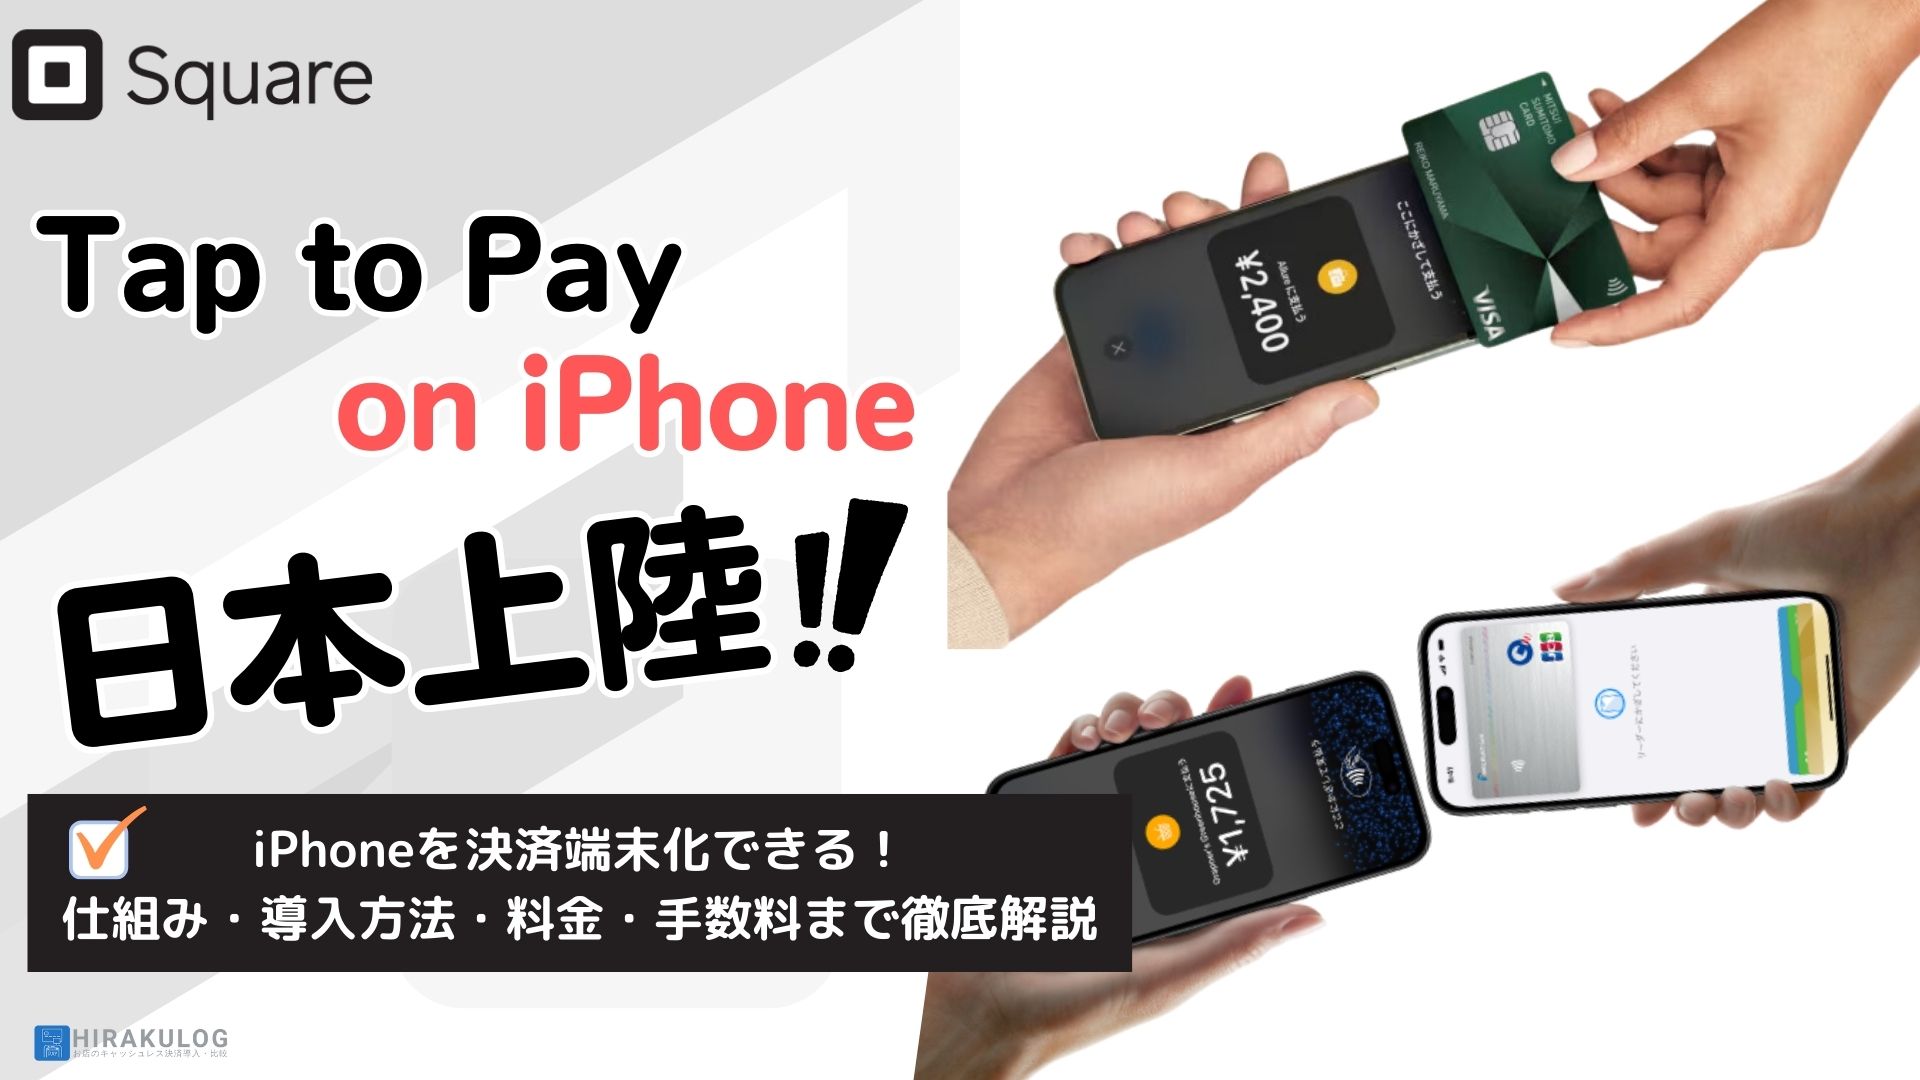 Tap to Pay on iPhone(iPhoneのタッチ決済)が日本上陸！決済手数料・導入方法など徹底解説